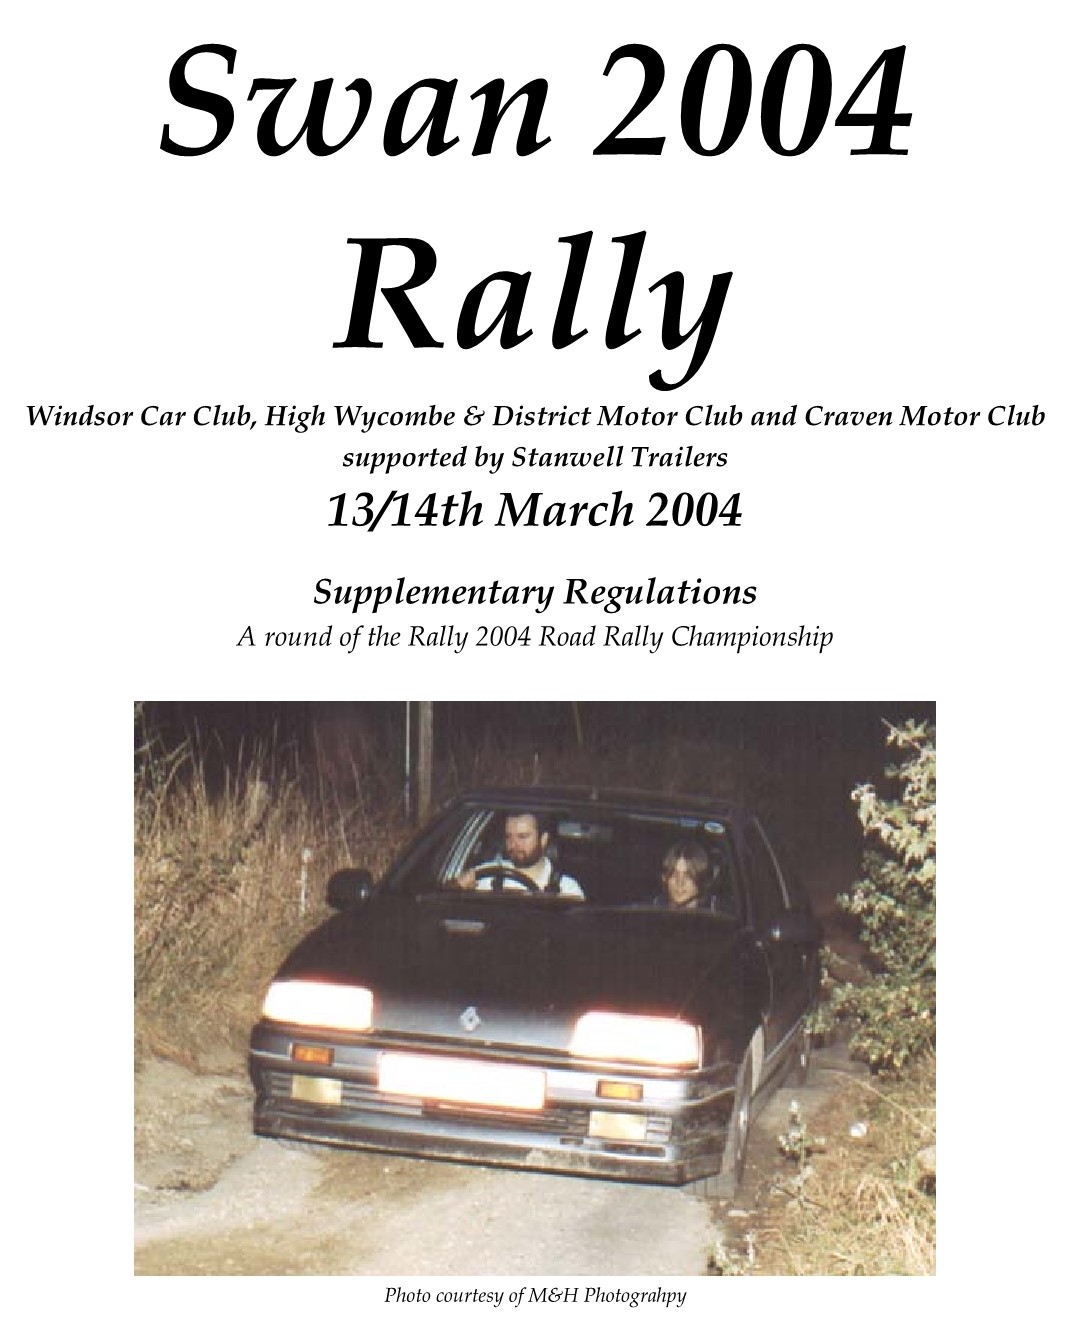 Swan 2004 Rally